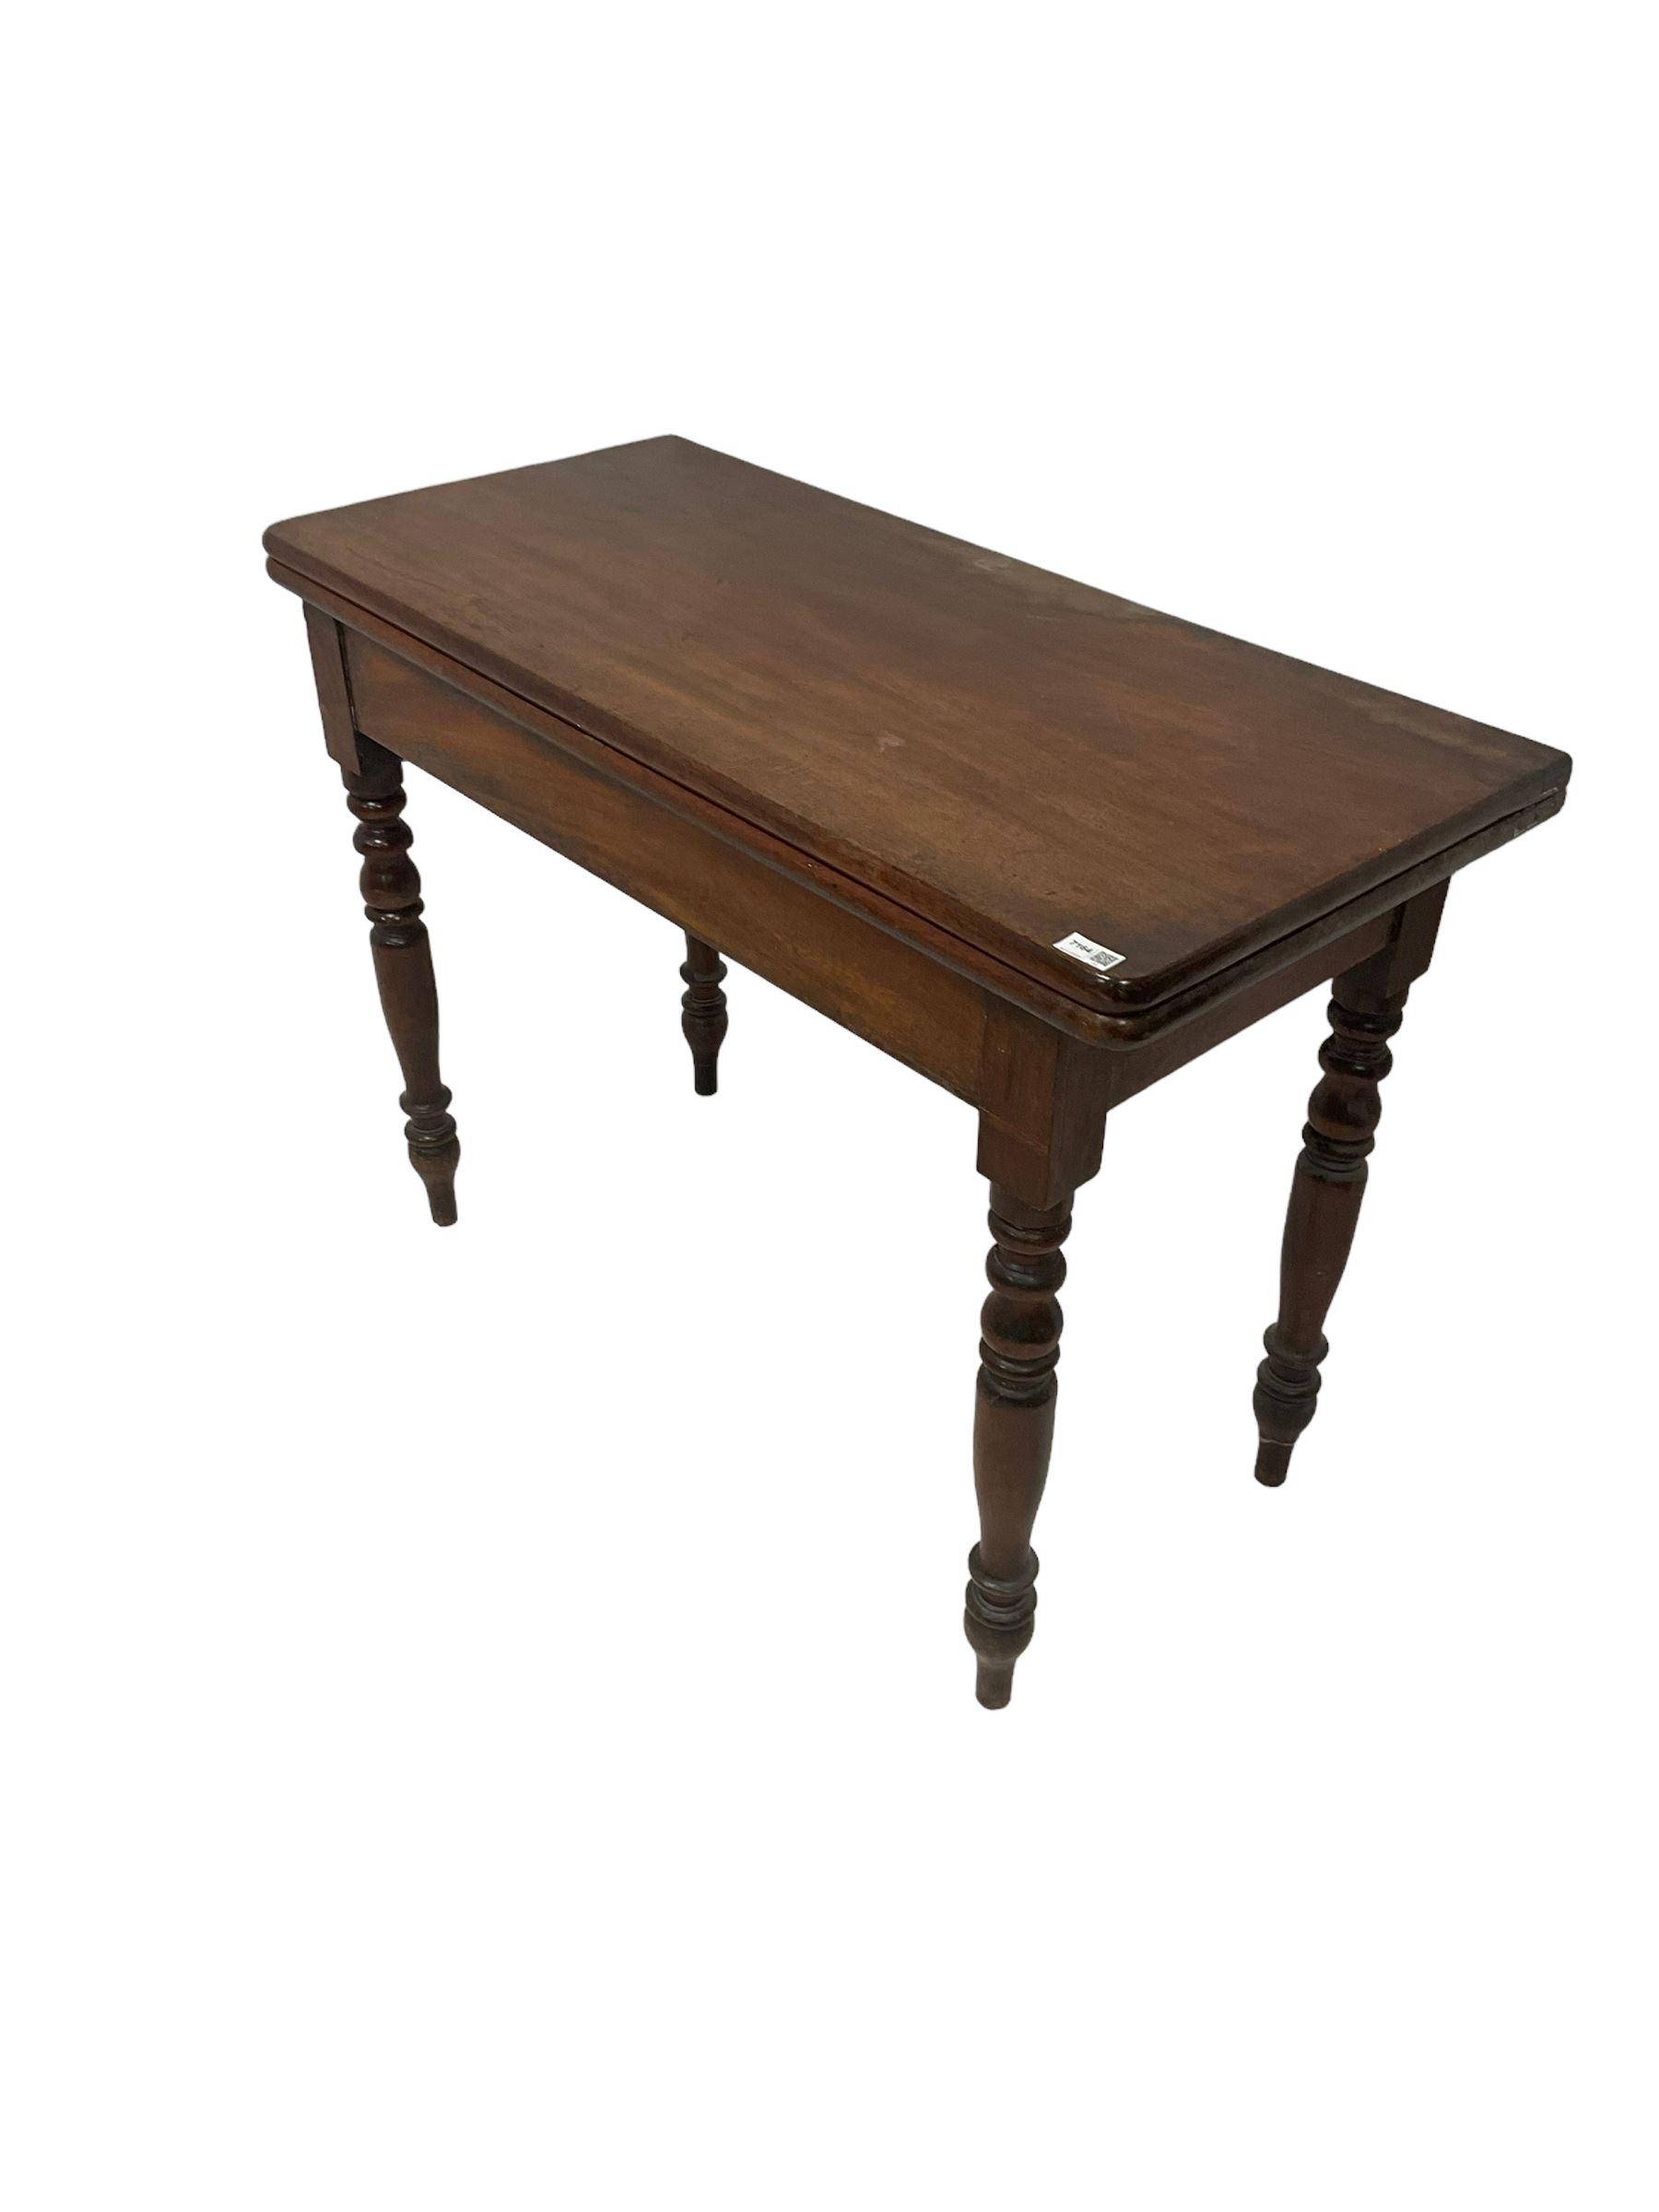 Victorian mahogany fold over tea table - Image 2 of 3